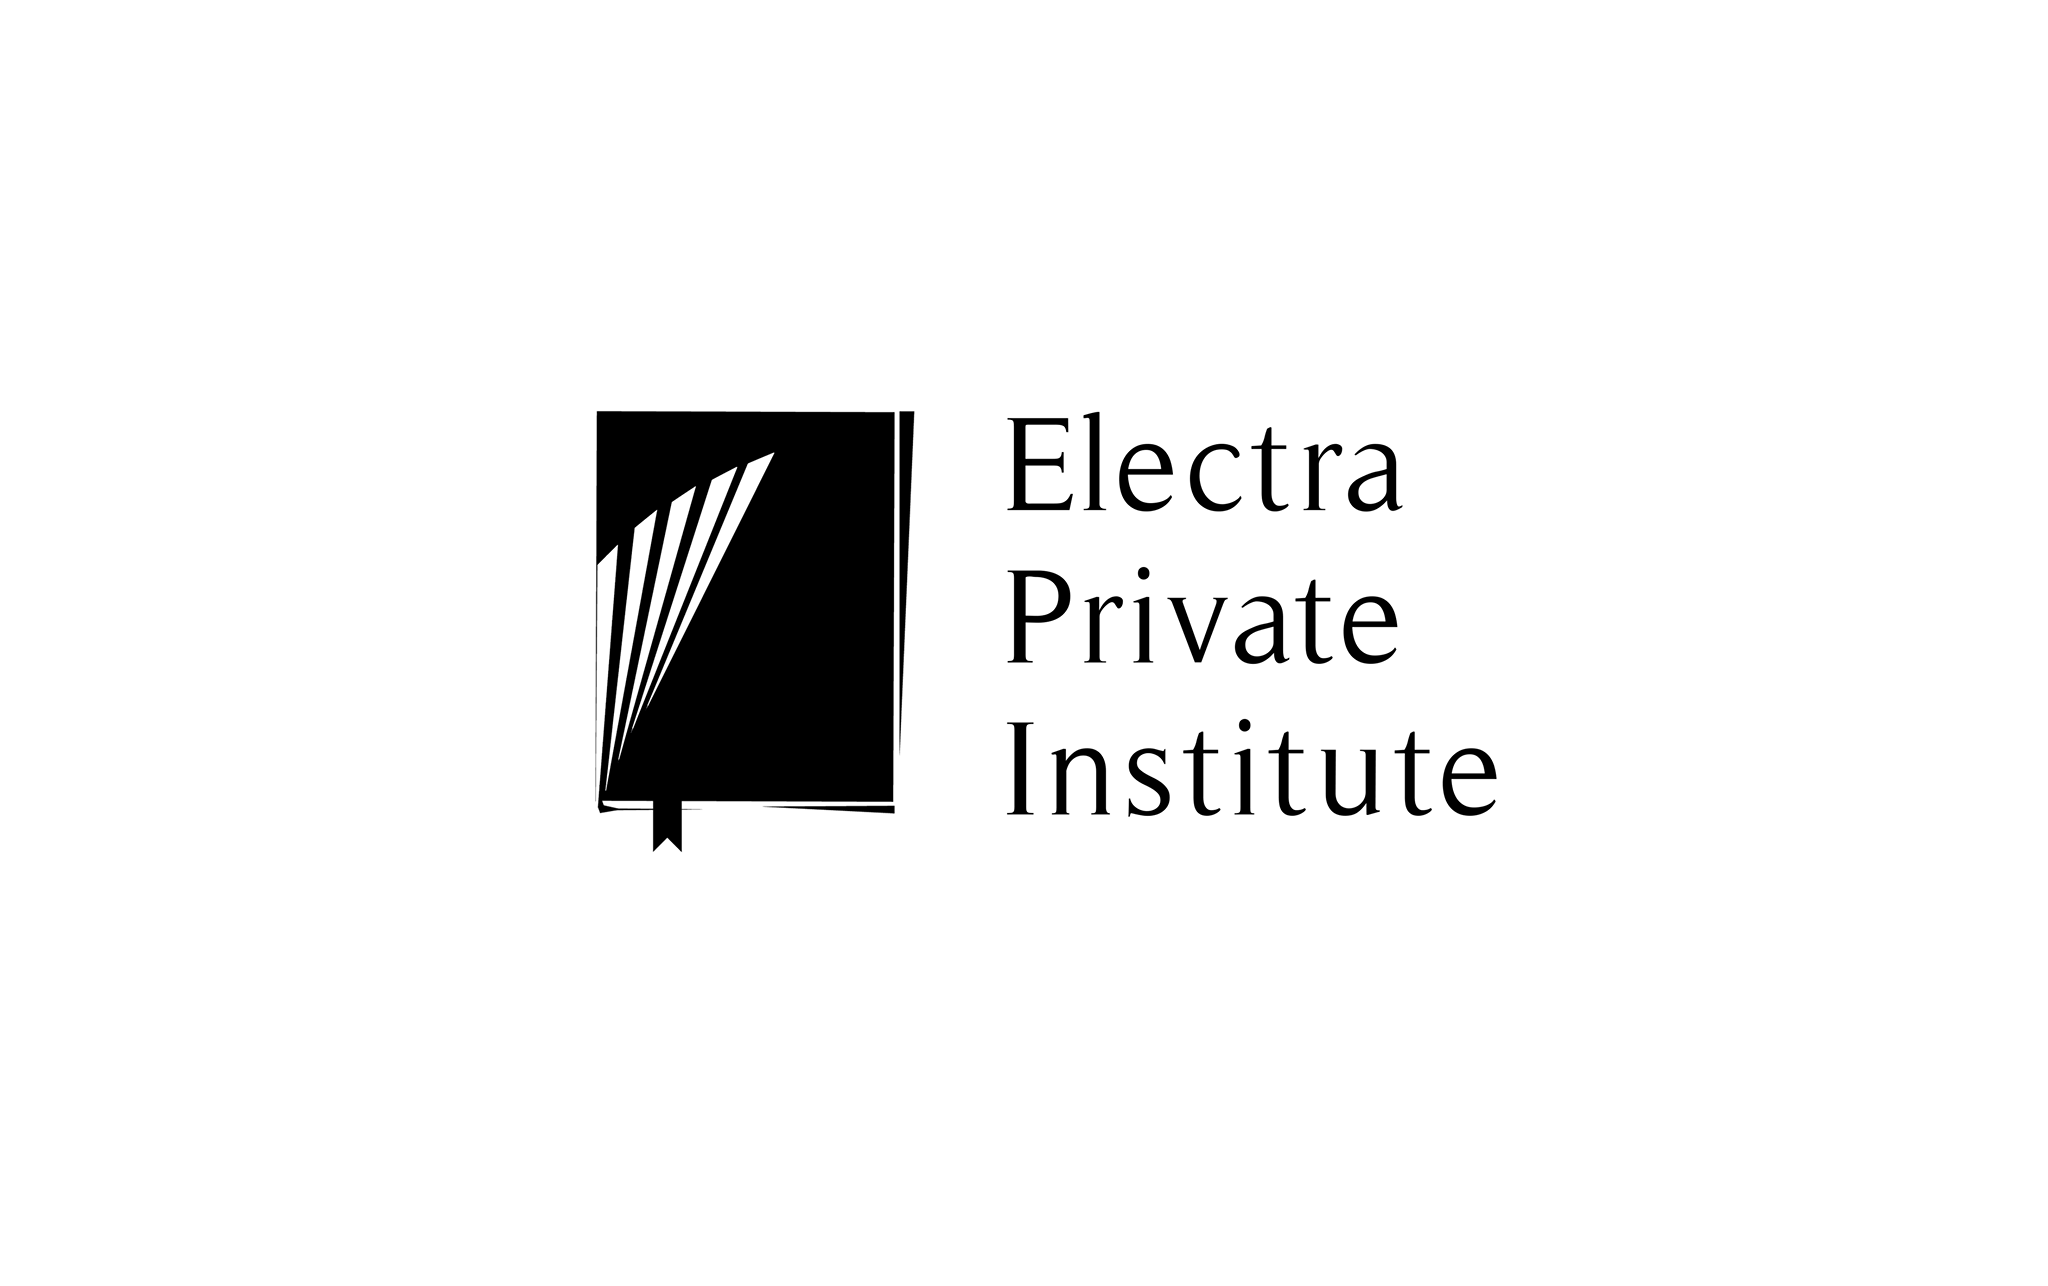 Electra Private Institute